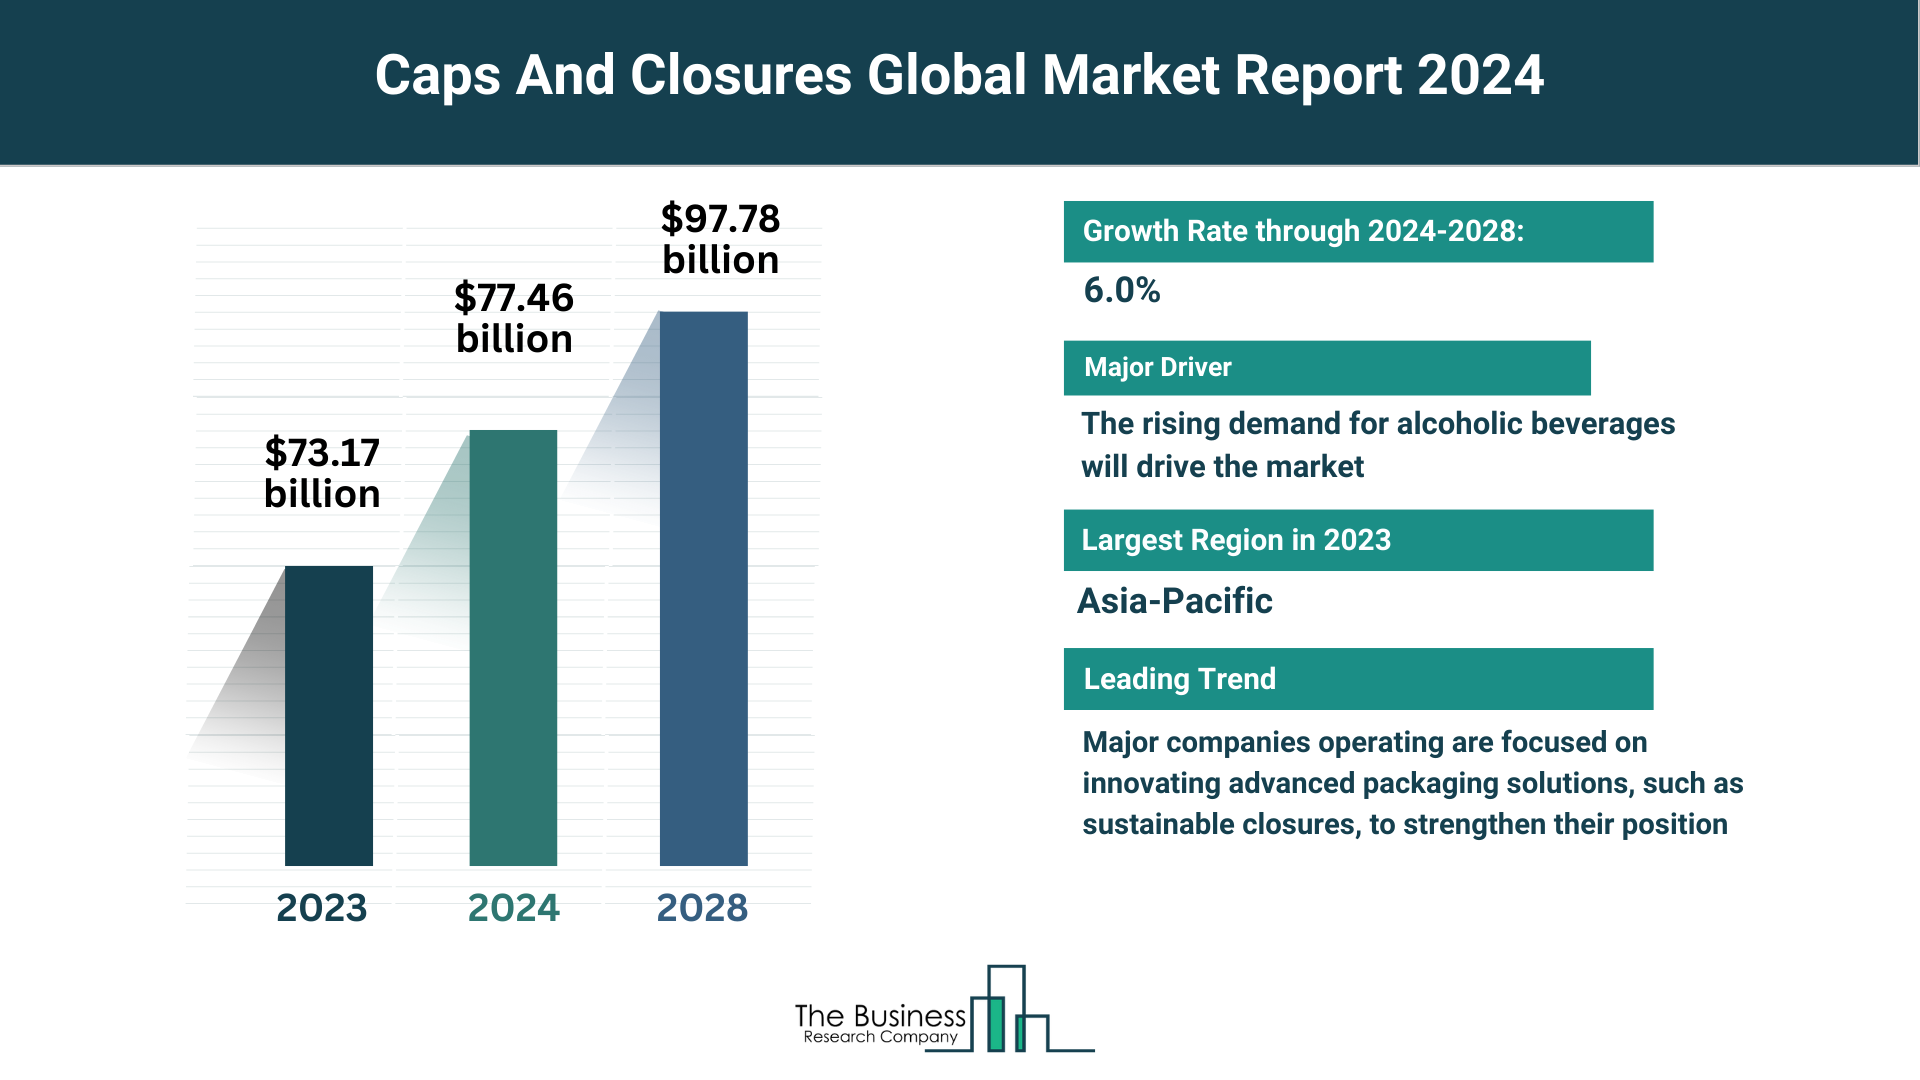 Global Caps And Closures Market